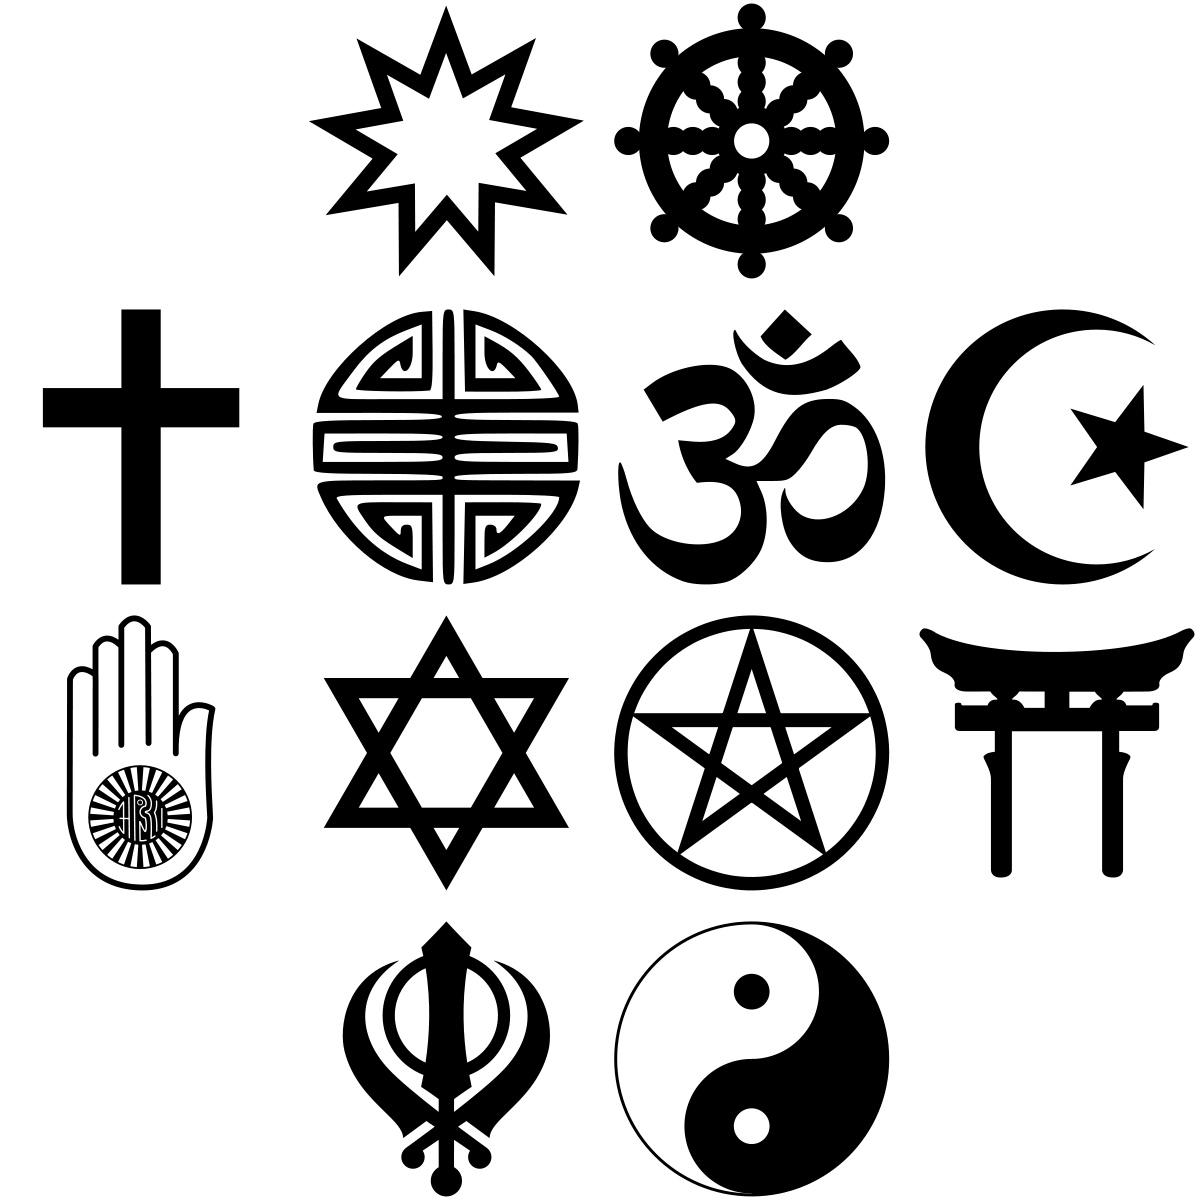 Religious symbols or icons